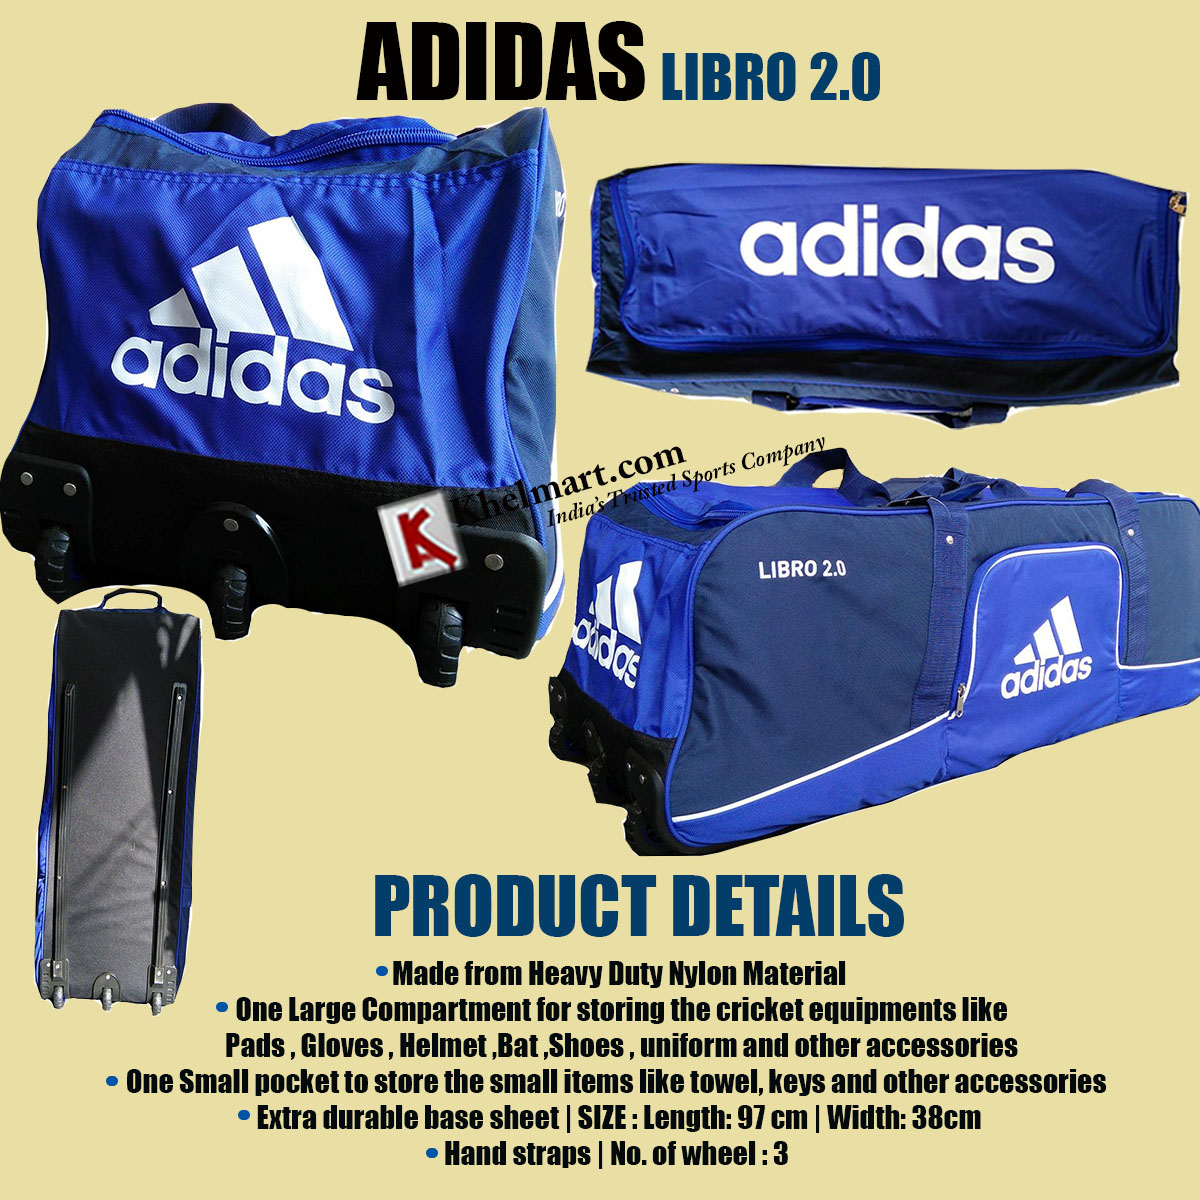 Adidas Libro 2 Point 0 Cricket Kit bag.jpg